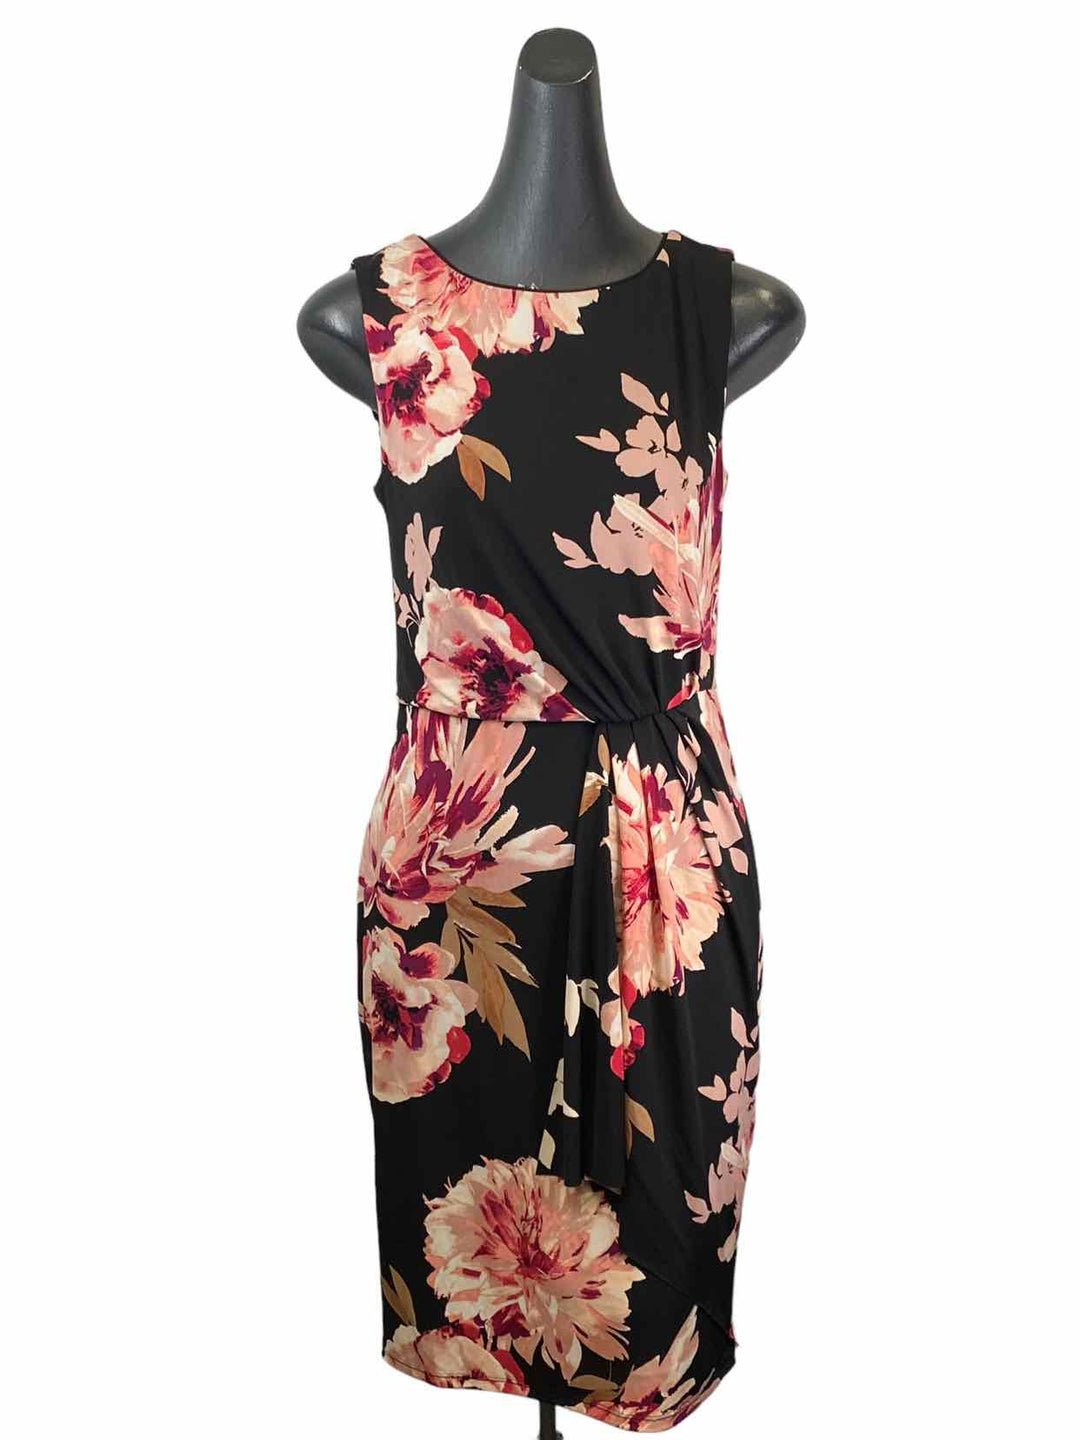 White House Black Market Size S/P Black Pink Floral Dress